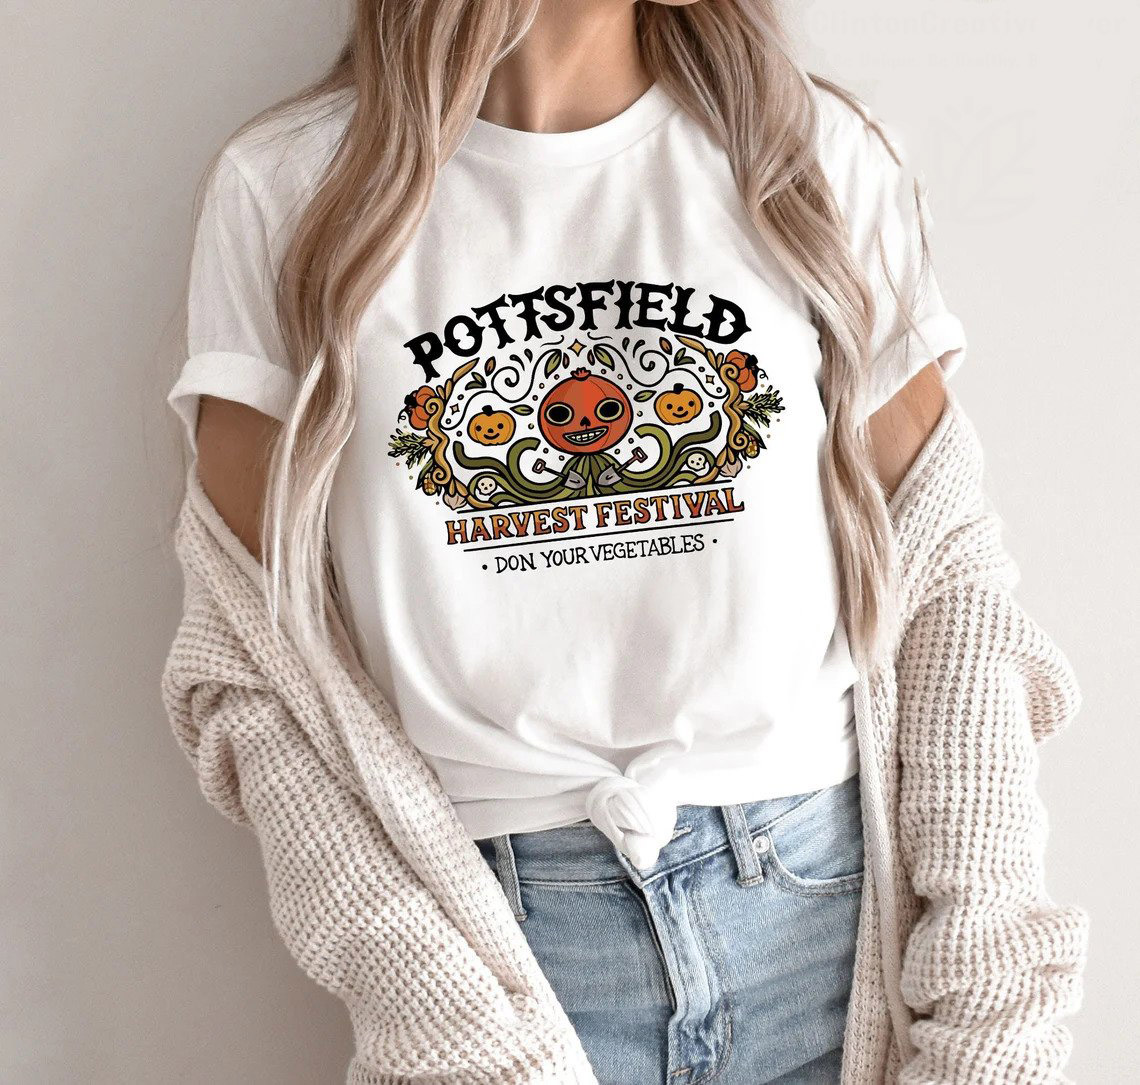 Pottsfield Harvest Festival Shirt, Over The Garden Wall Shirt